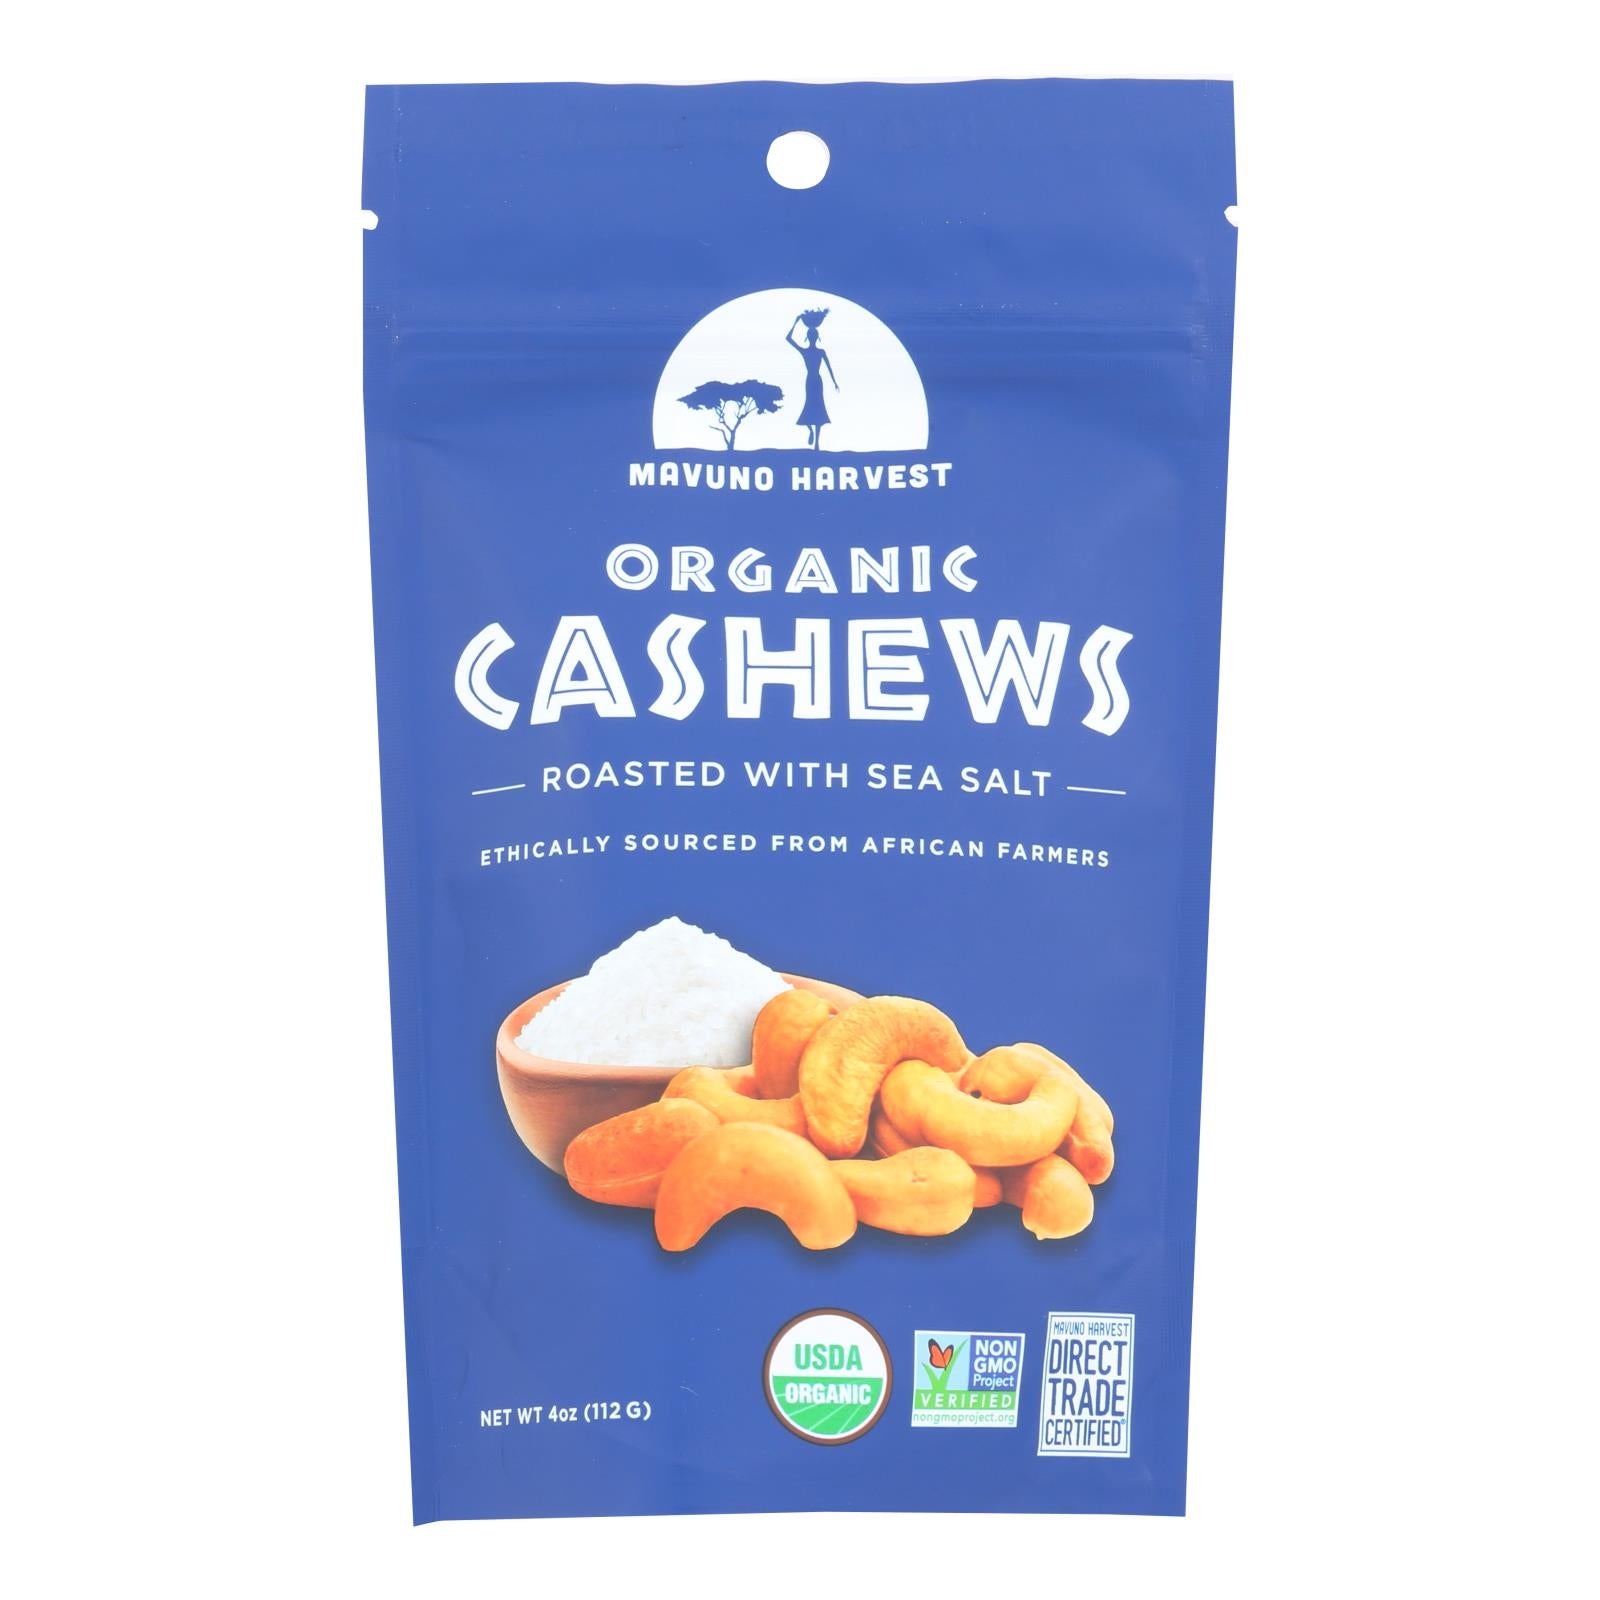 Récolte de Mavuno, Mavuno Harvest - Noix de cajou rôties biologiques - sel de mer - carton de 6 - 4 oz (paquet de 6)